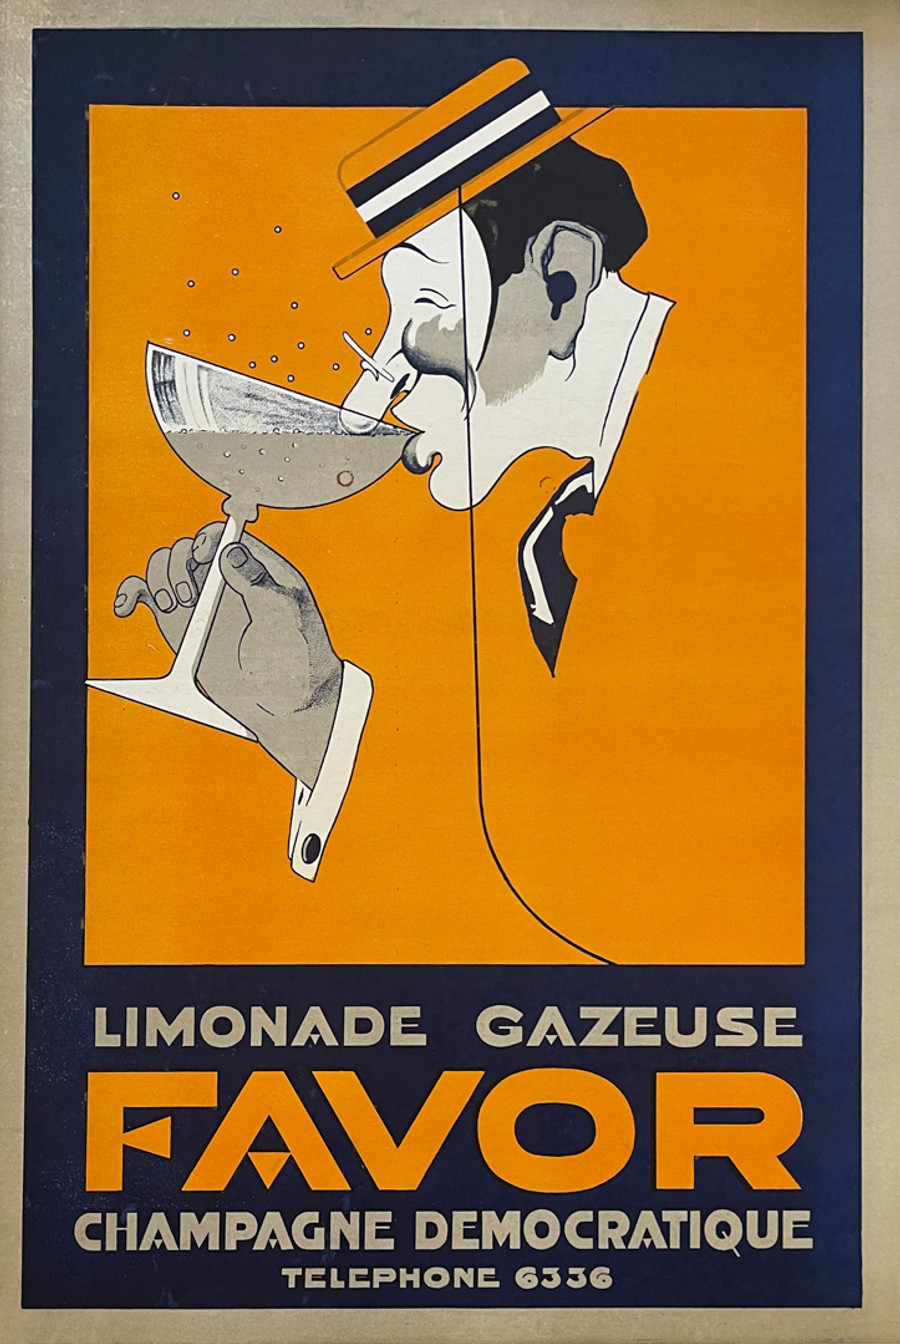 Favor Limonade Champagne original 1930 vintage advertisement poster linen backed.